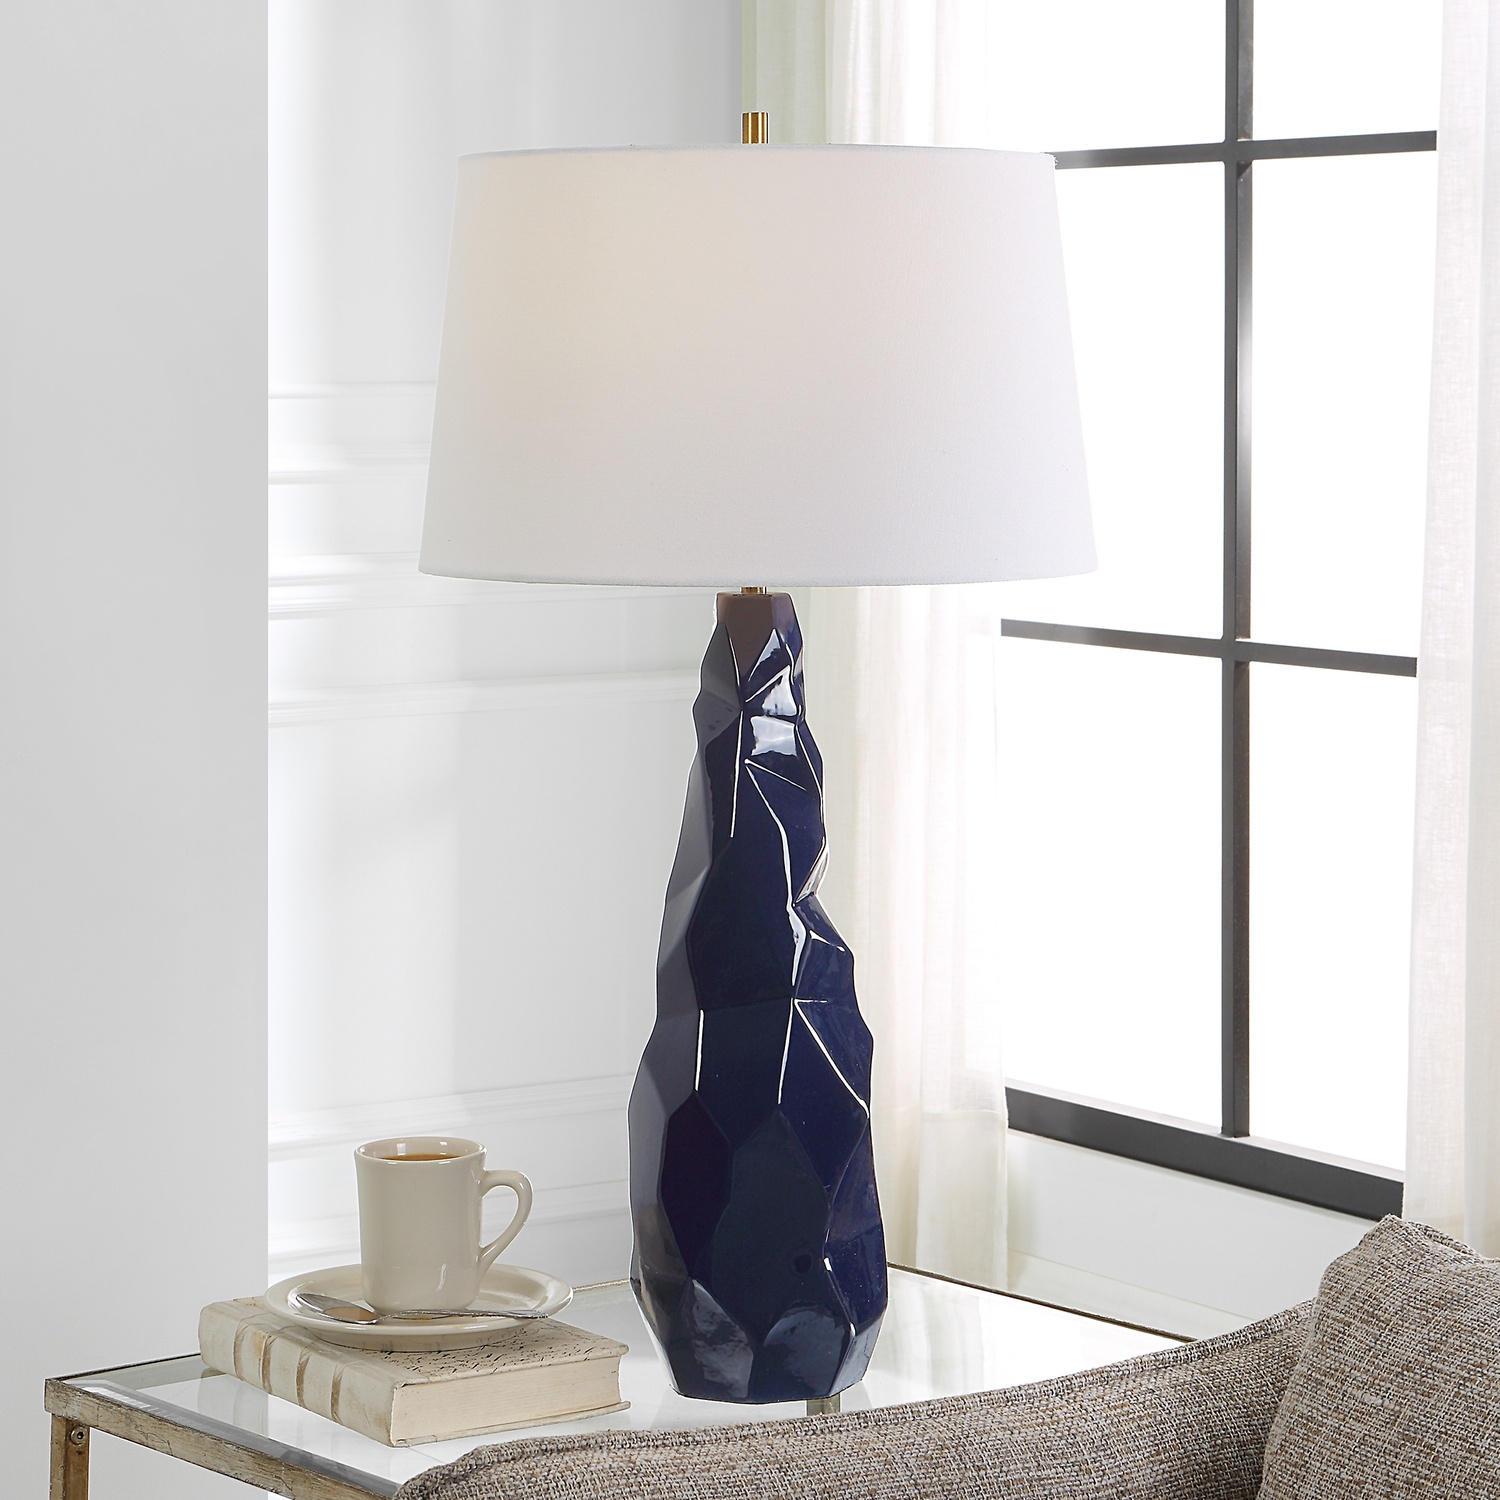 Kavos-Geometric Blue Table Lamp